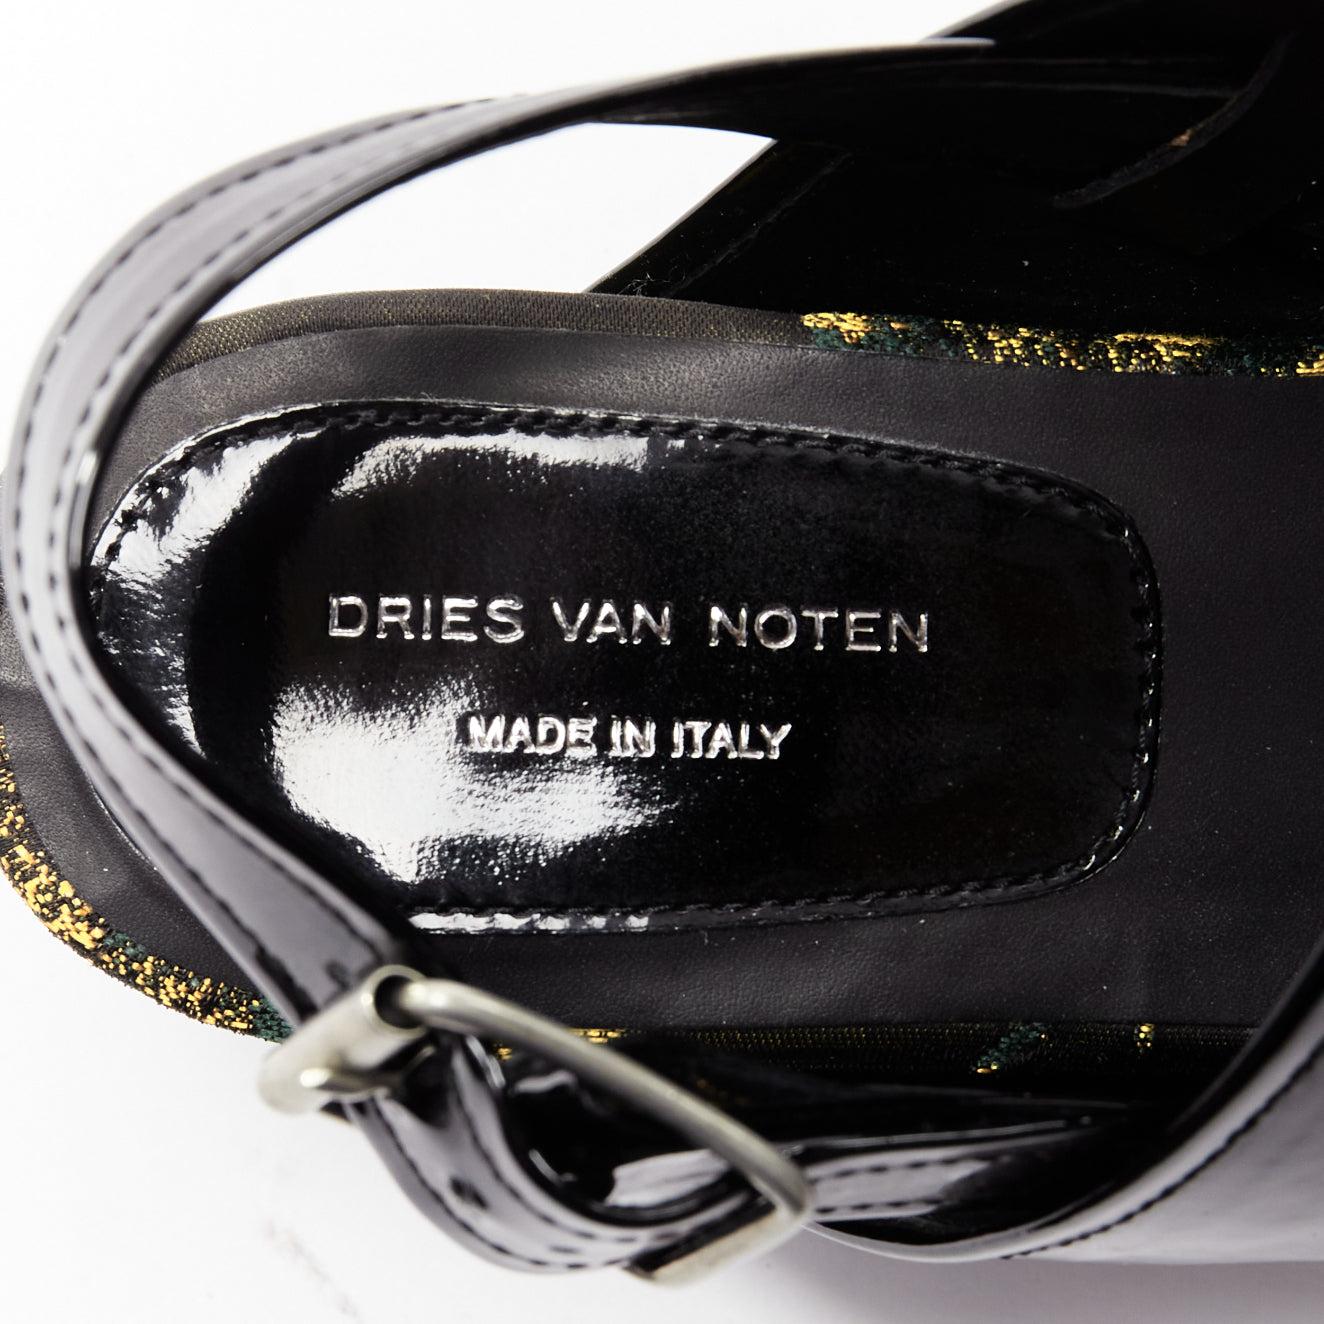 DRIES VAN NOTEN balck patent floral broade green suede platform sandal EU36.5 For Sale 5